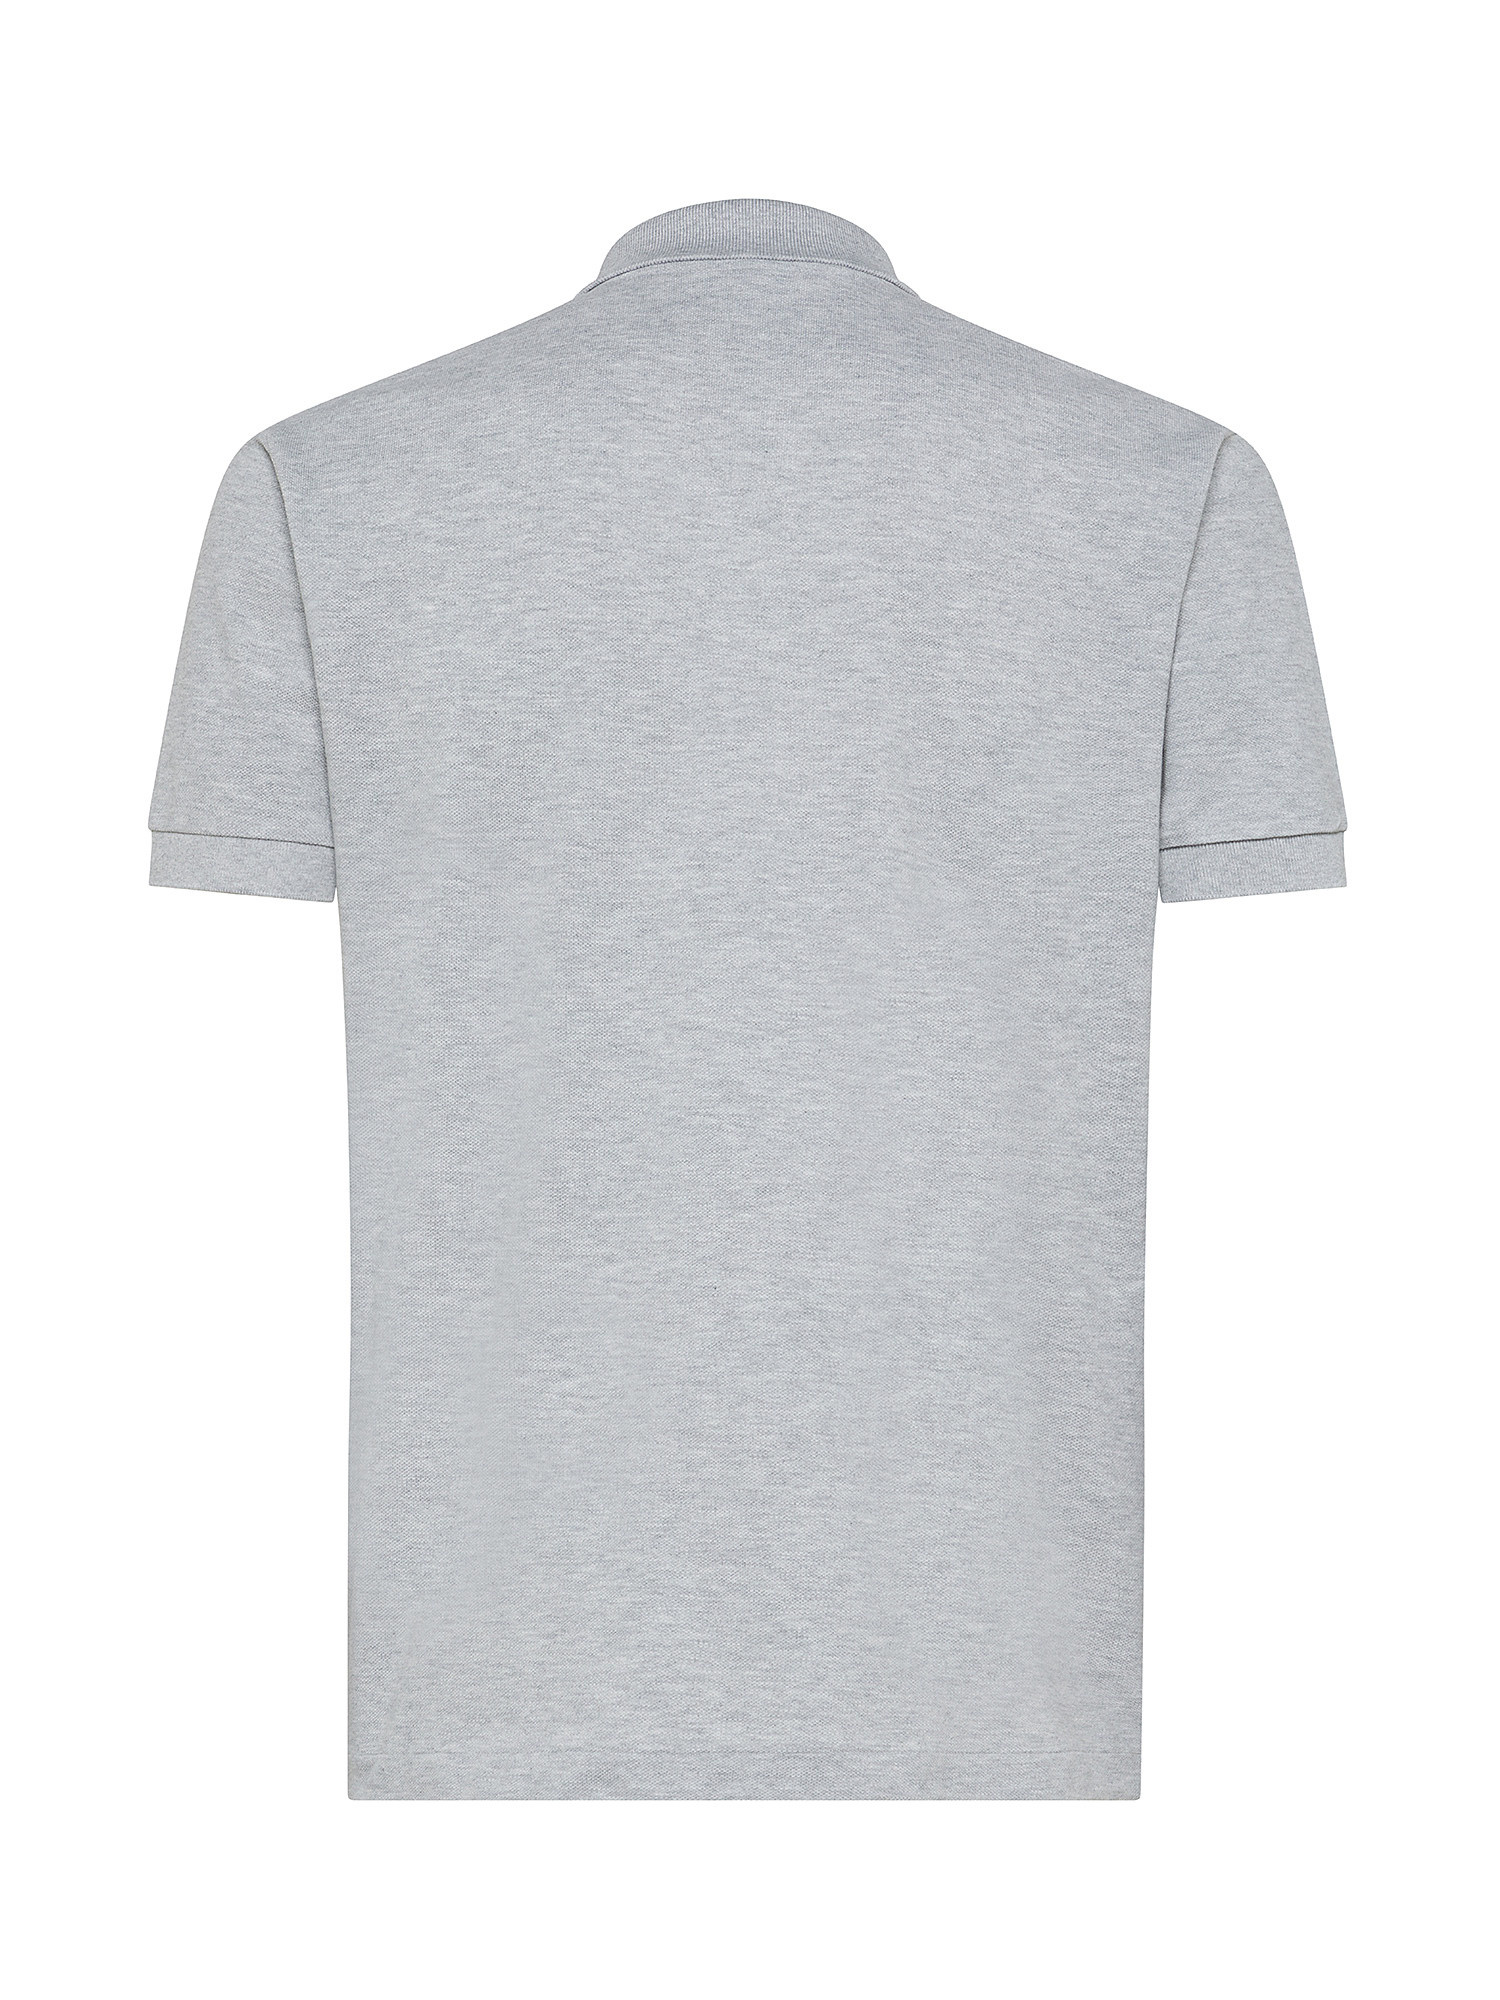 Lacoste - Classic cut polo shirt in petit piquè cotton, Grey, large image number 1